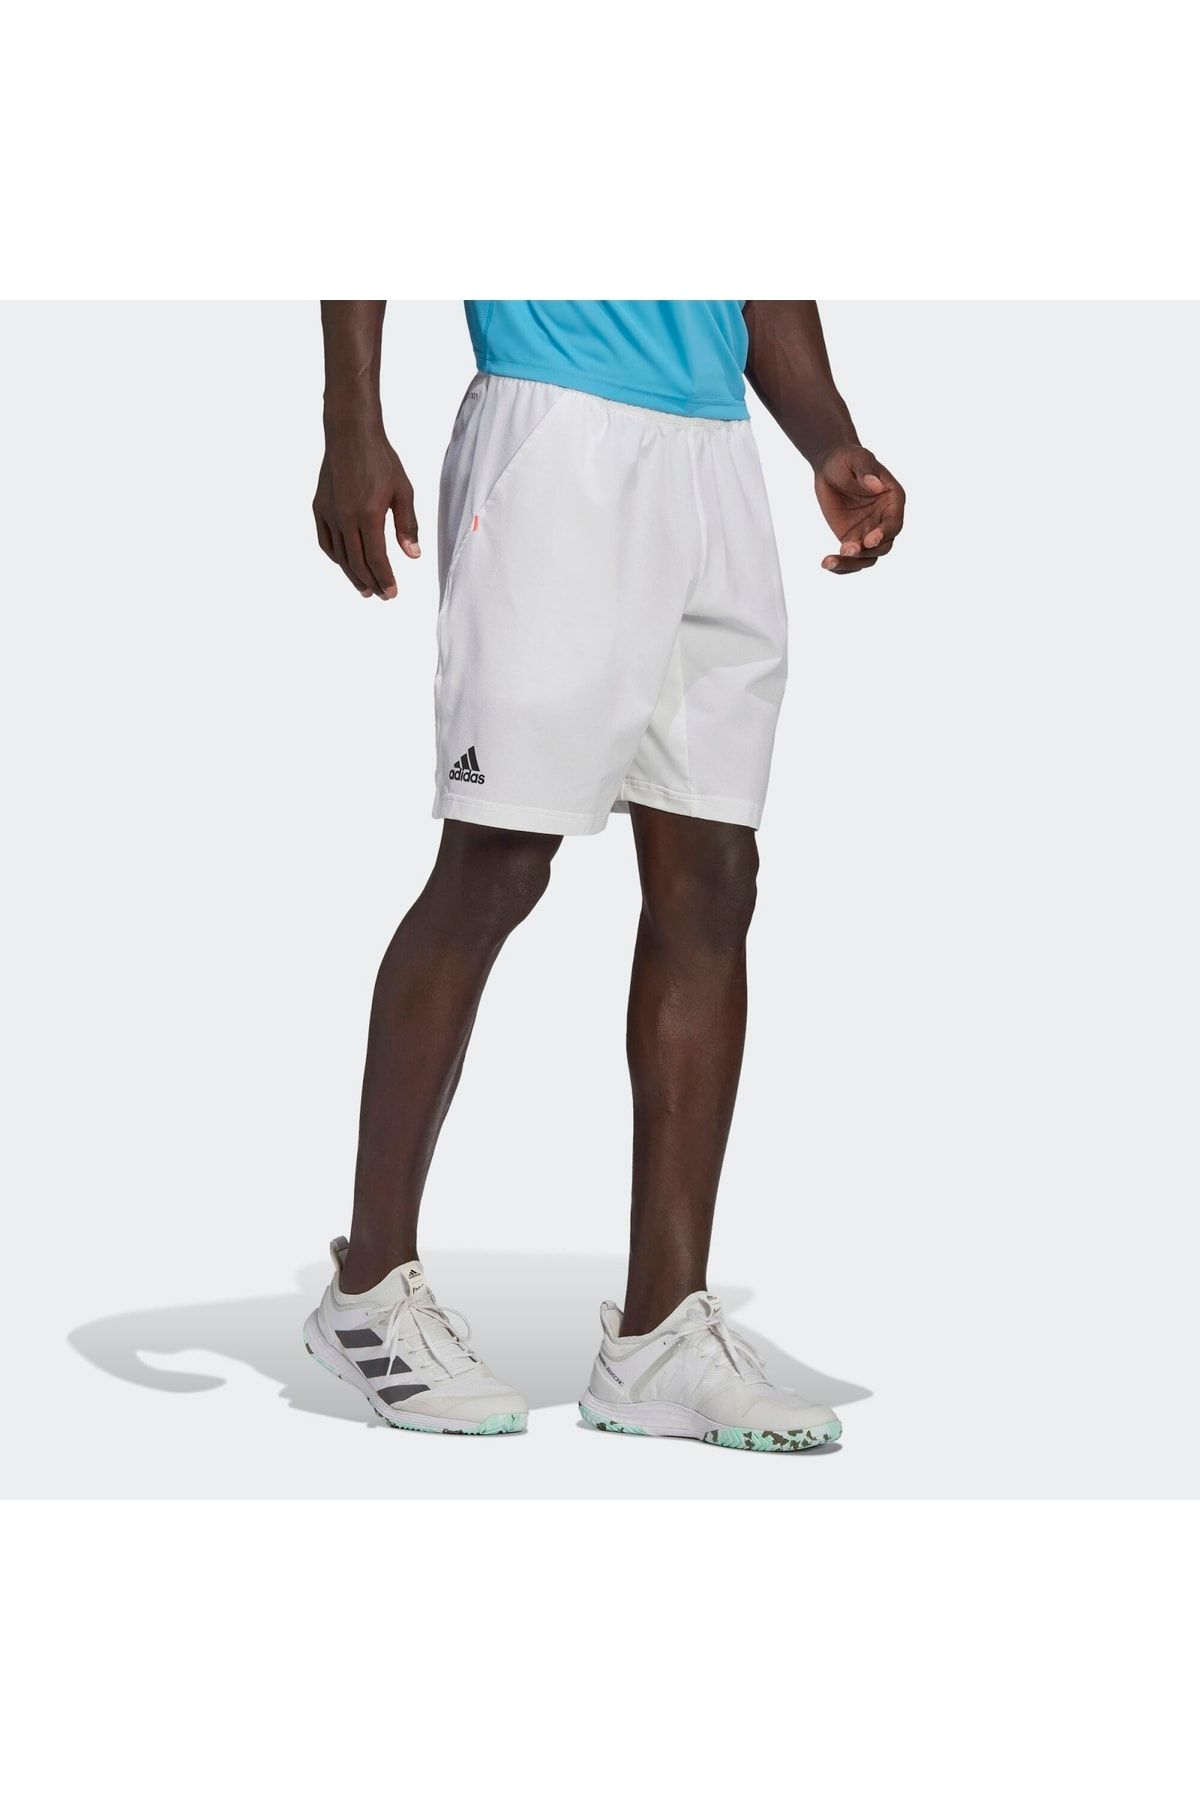 adidas Ergo Erkek Beyaz Tenis Şortu (hb9149)